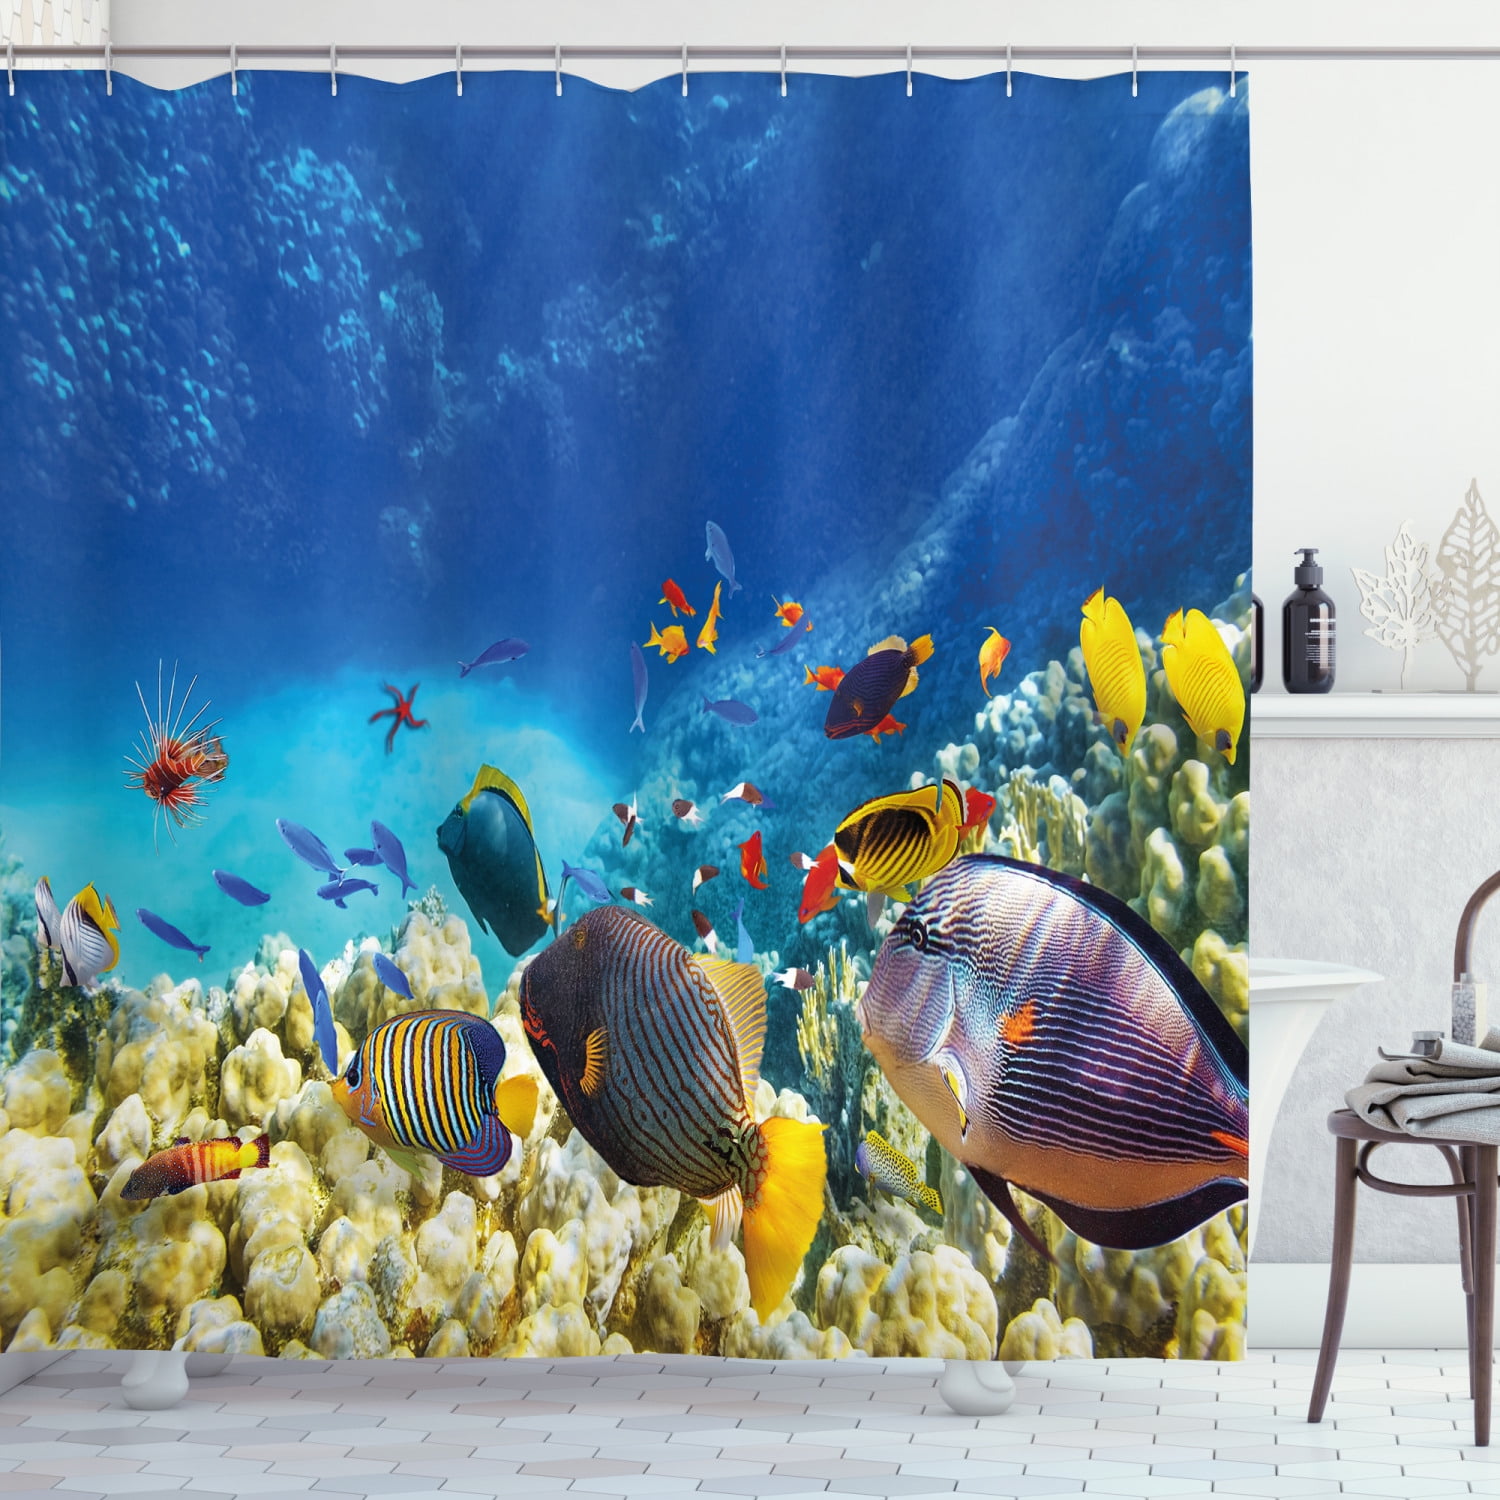 The Underwater World Fabric Shower Curtain Liner Bathroom Set Ocean Fish Seaweed 